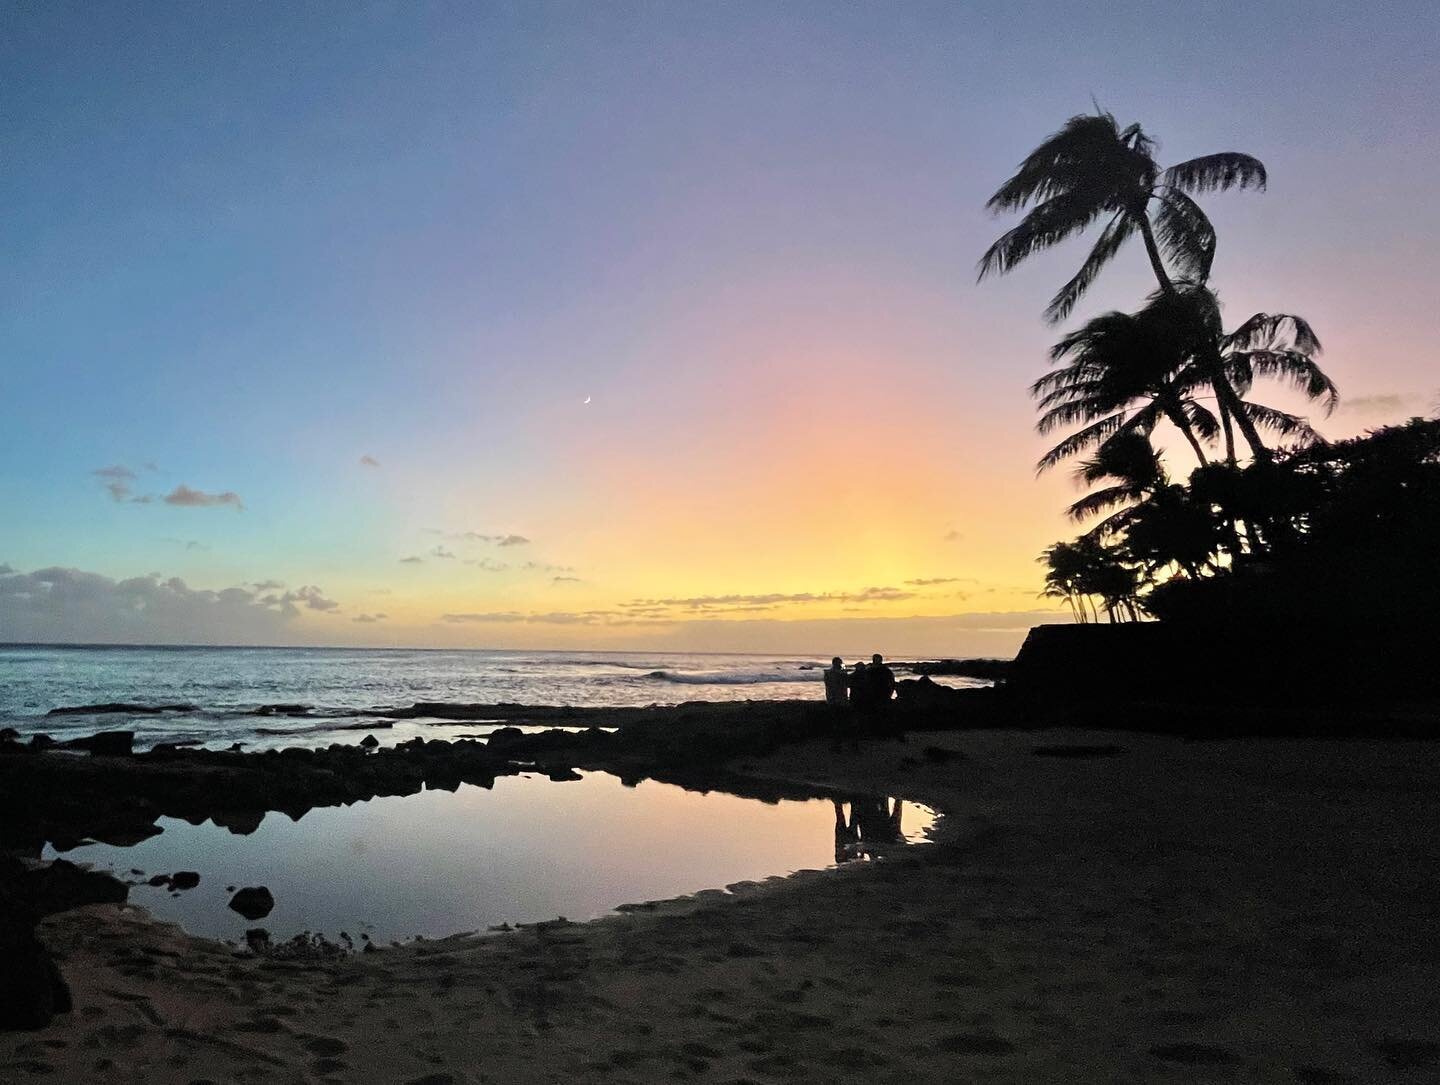 I caught the sunset the last three nights. It never gets old. 
.
.
.
#sunset #sunsetlover #nature #nightsky #hawaii #islandlife #islandliving #kauai #kauaihawaii #soontobemommy #pregnantlife #datenights #meditation #transcendentalmeditation #happypla